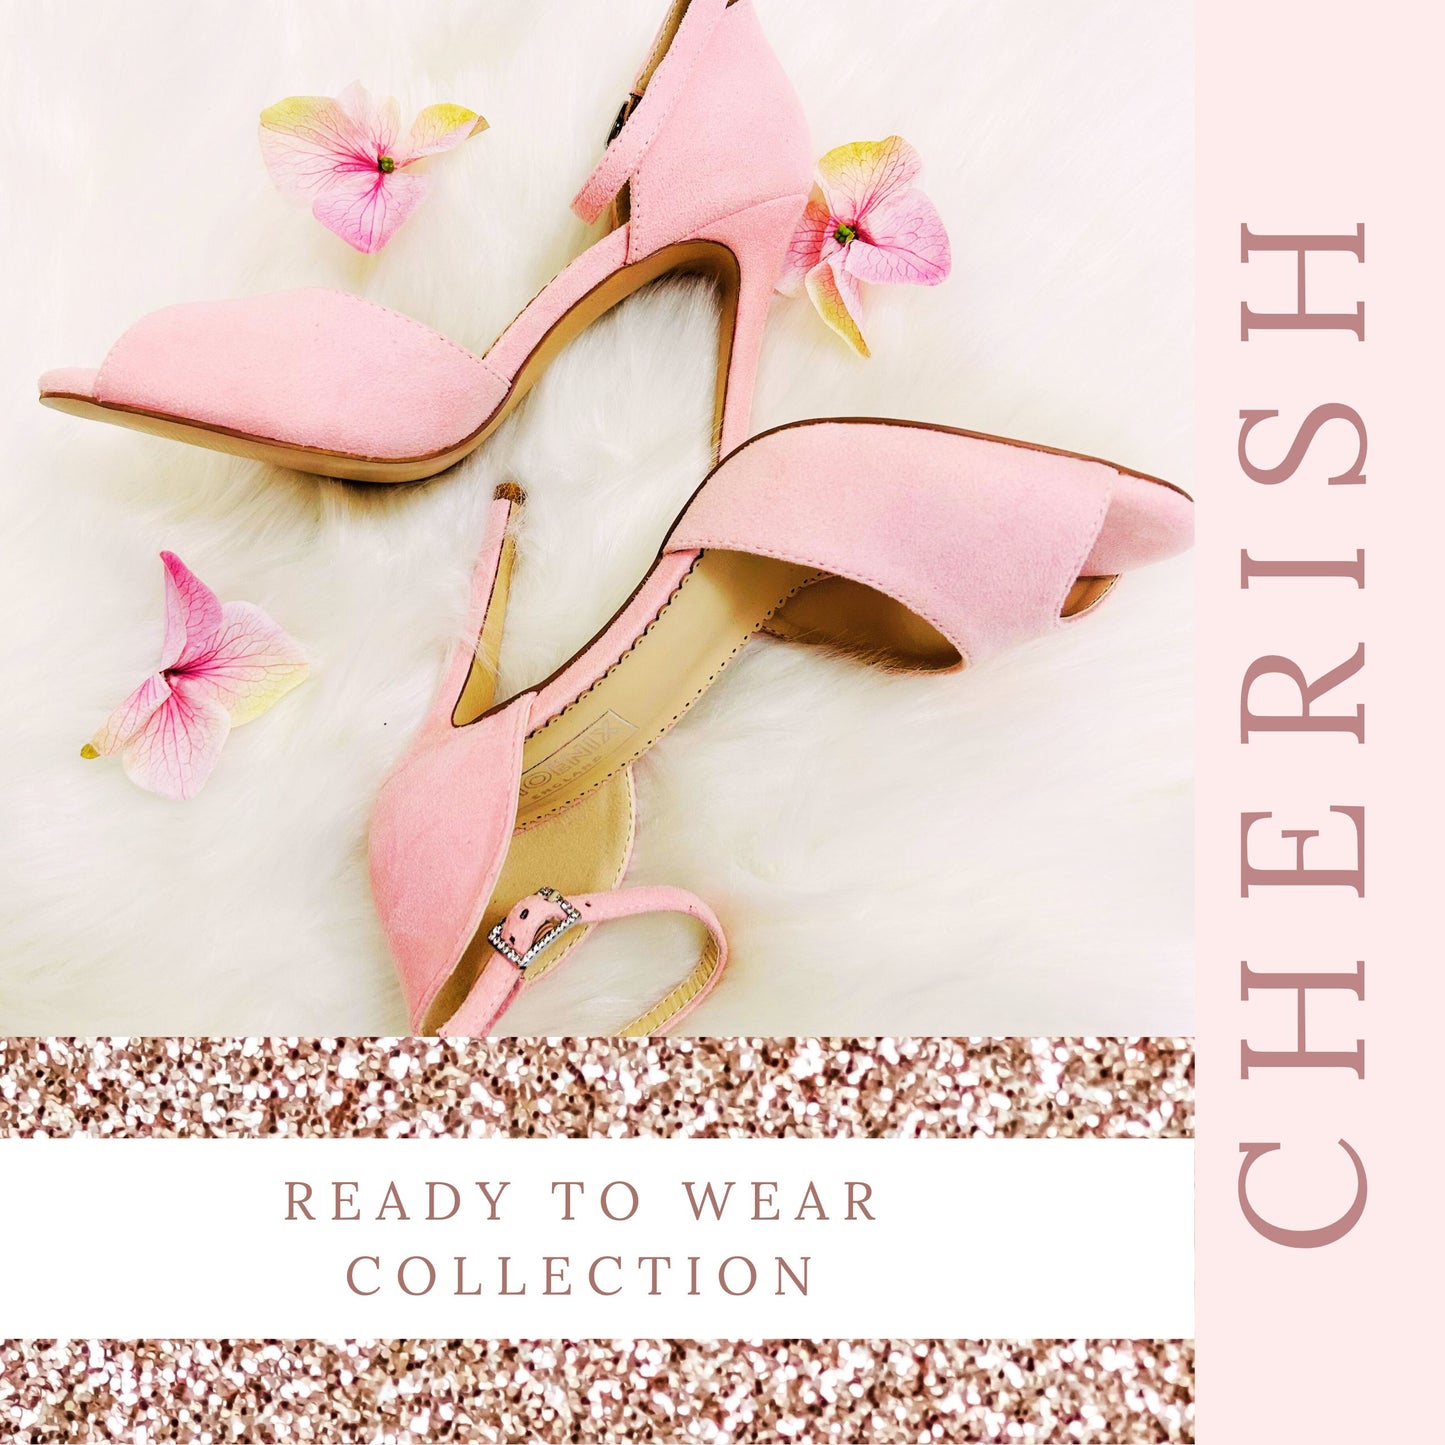 light-pink-bridesmaids-shoes